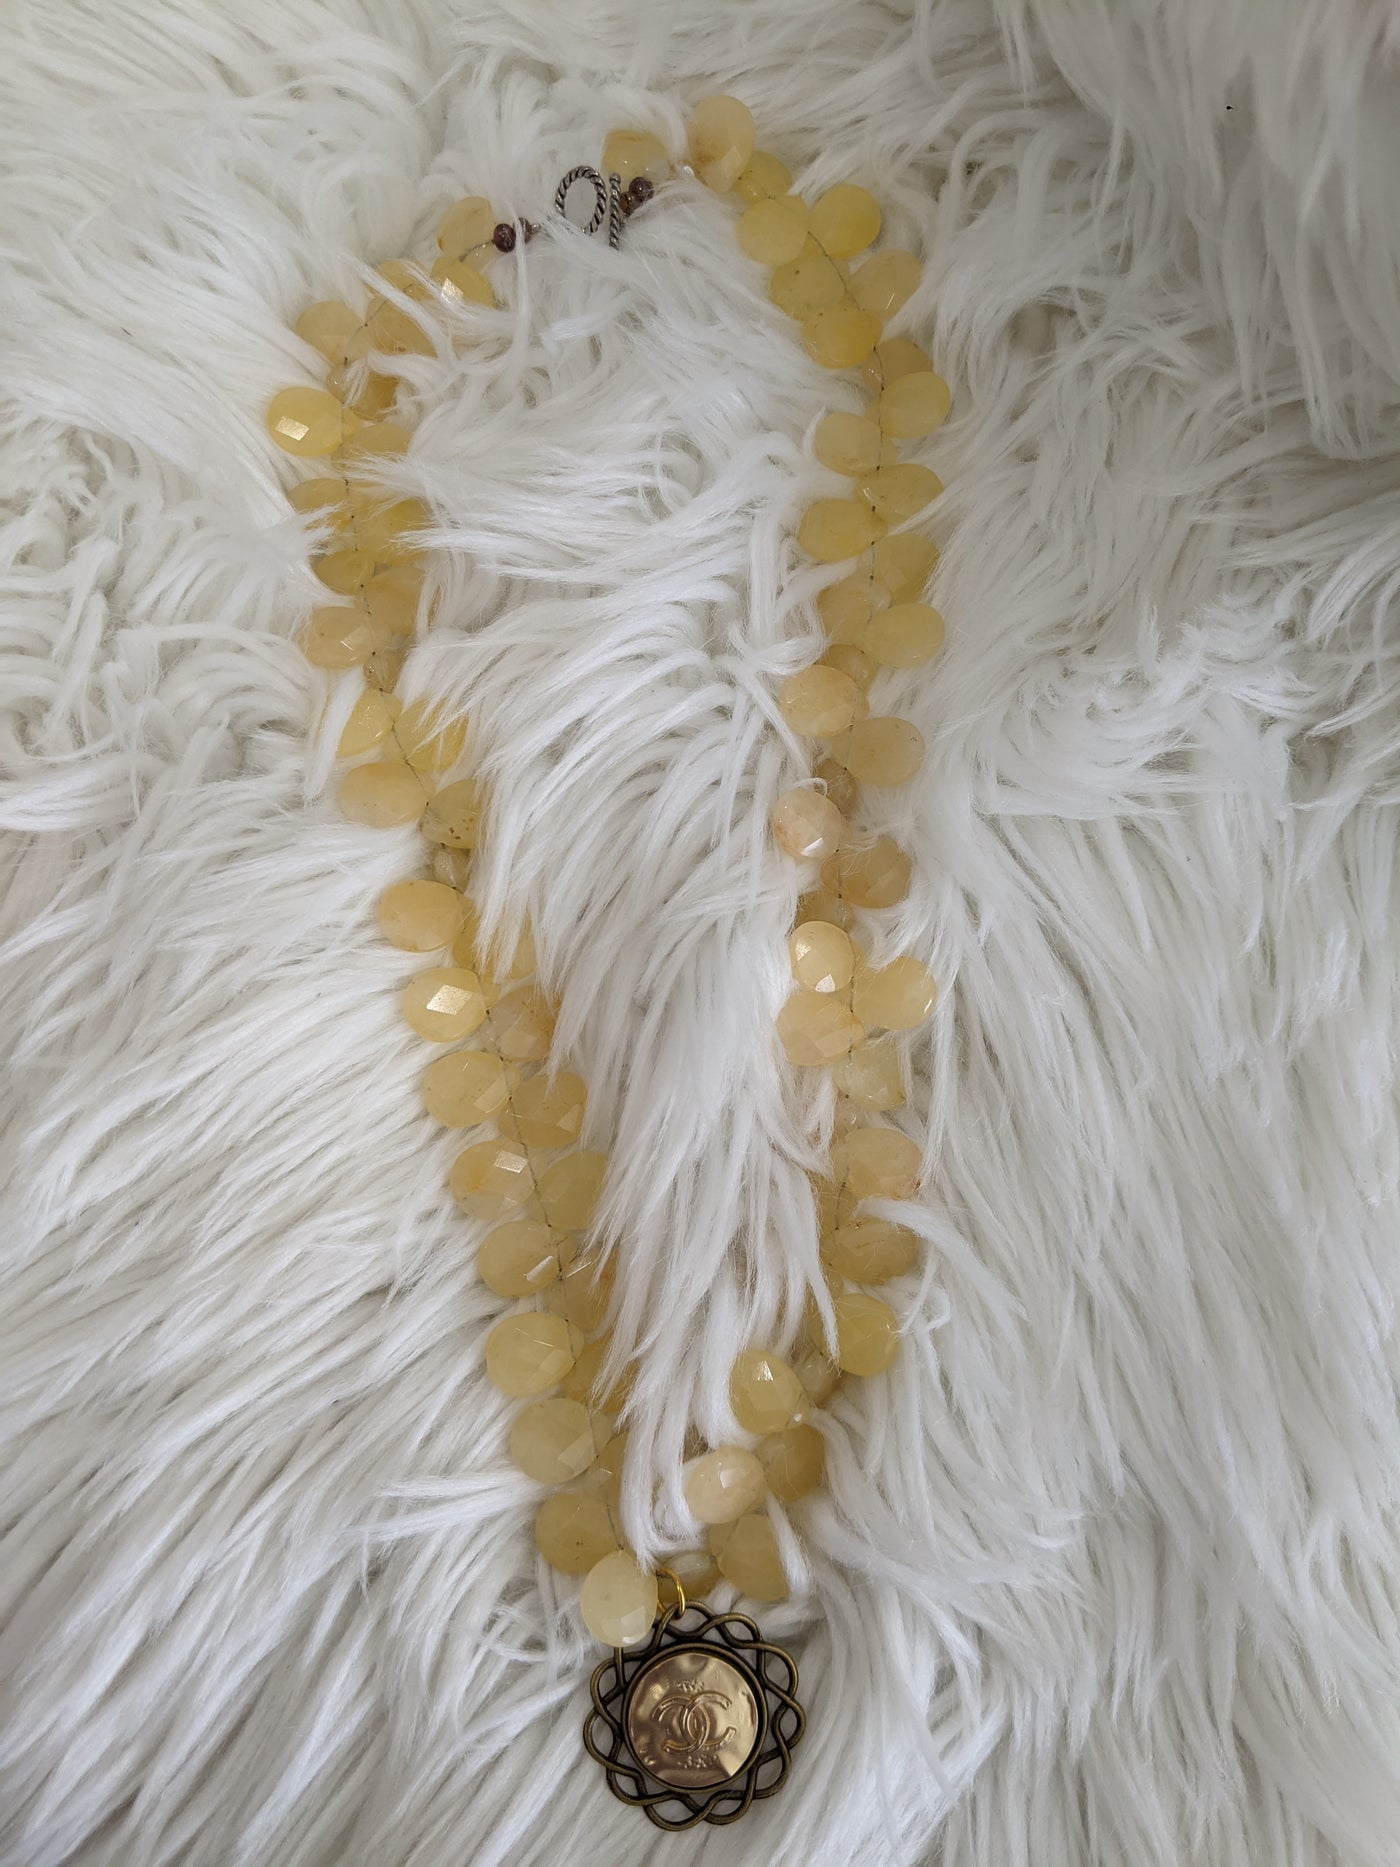 TS110 - Chanel on Artisian Yellow Beads